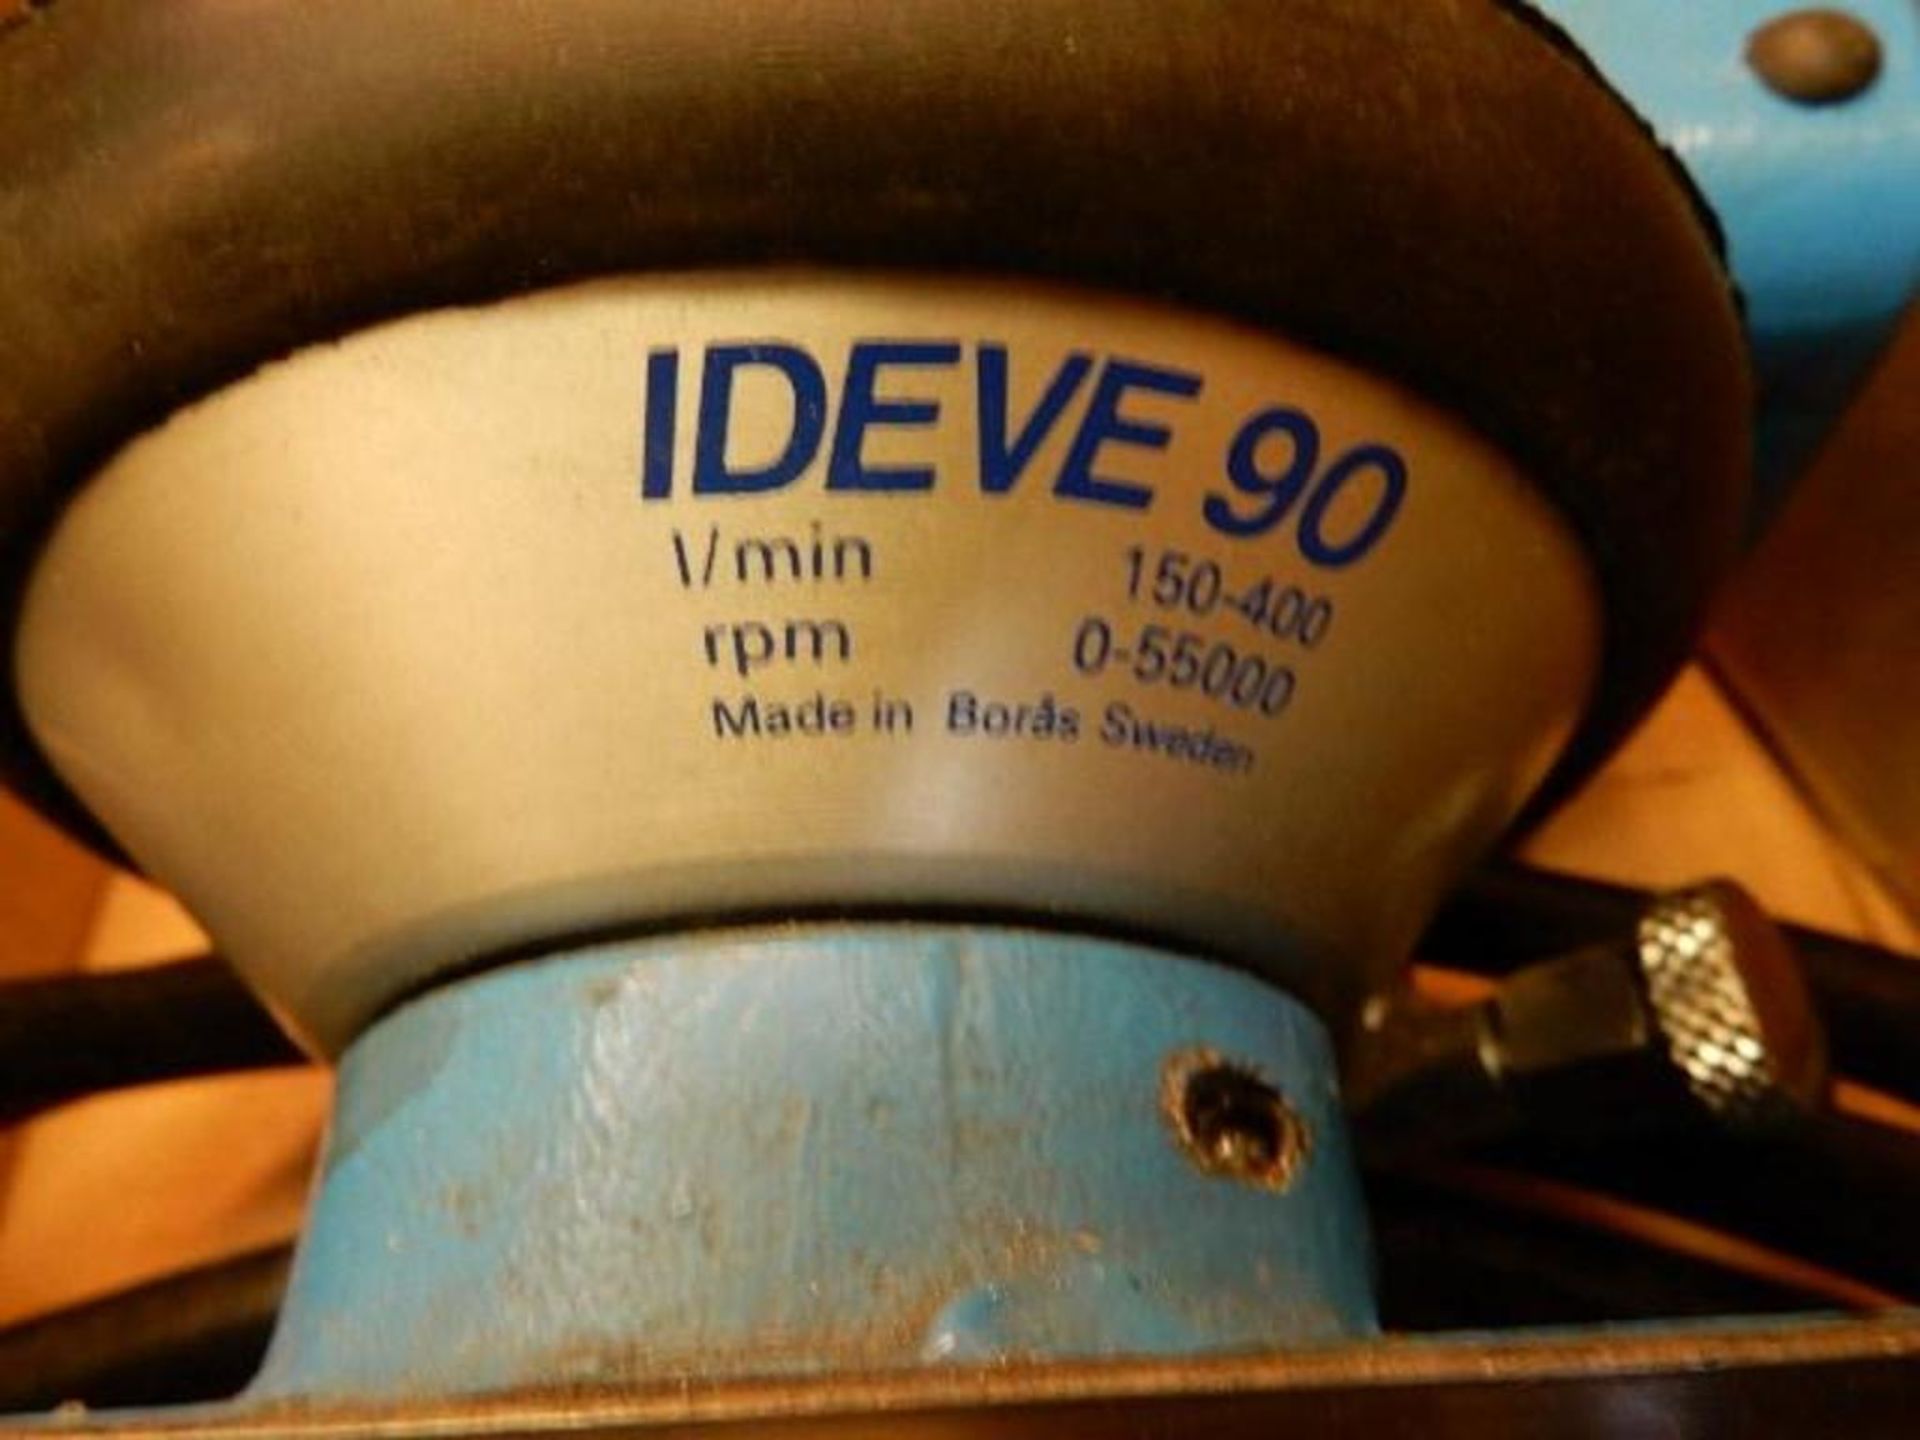 Ideve 90 Pneumatic Bevel Tools - Image 2 of 3